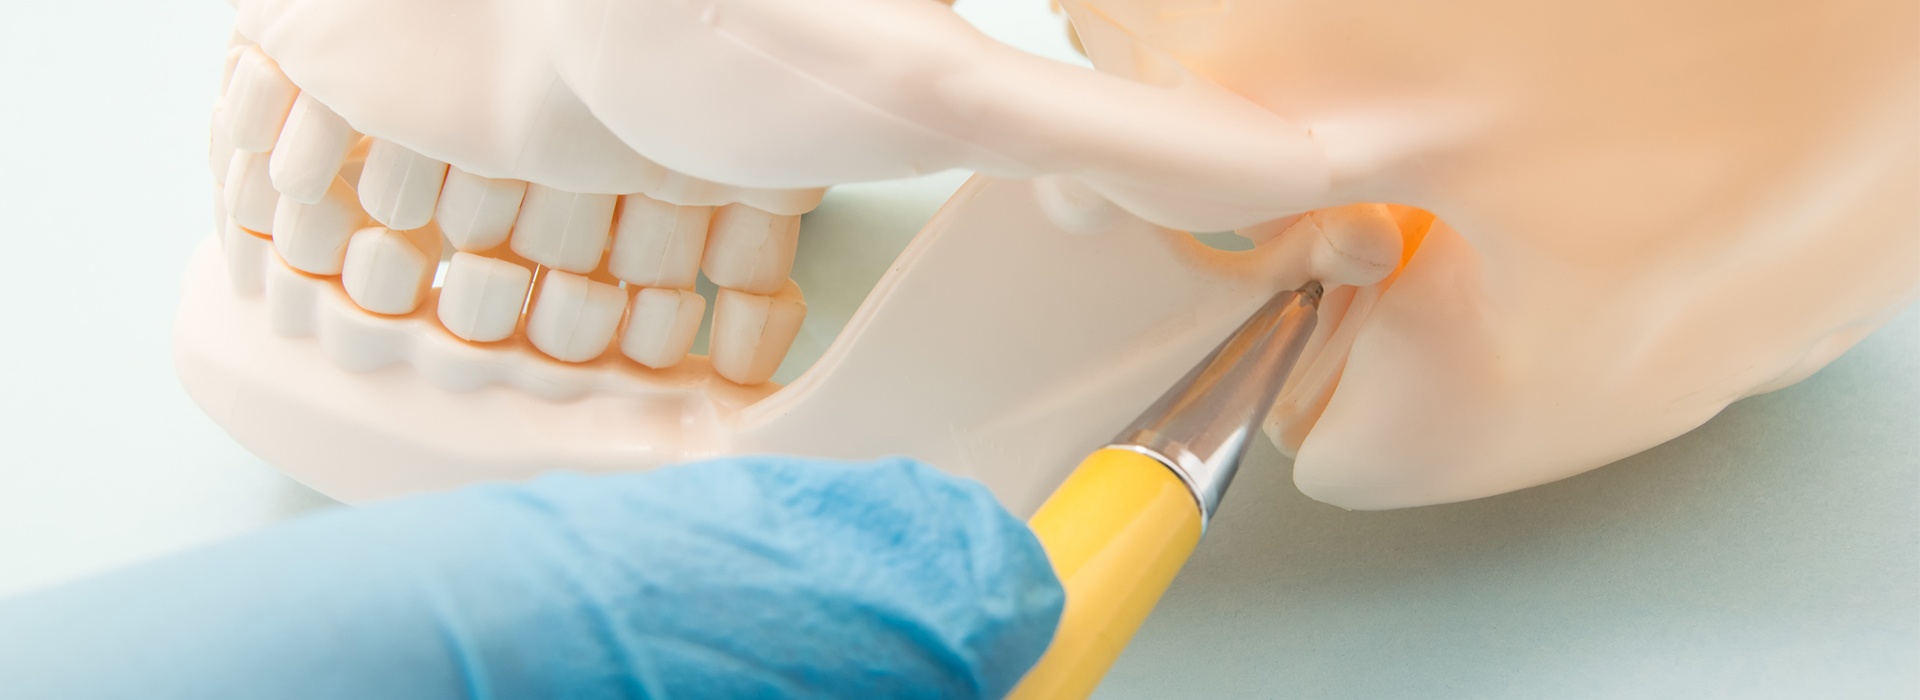 Cameron Park Dental Care | Cosmetic Dentistry, Sedation Dentistry and Preventative Program